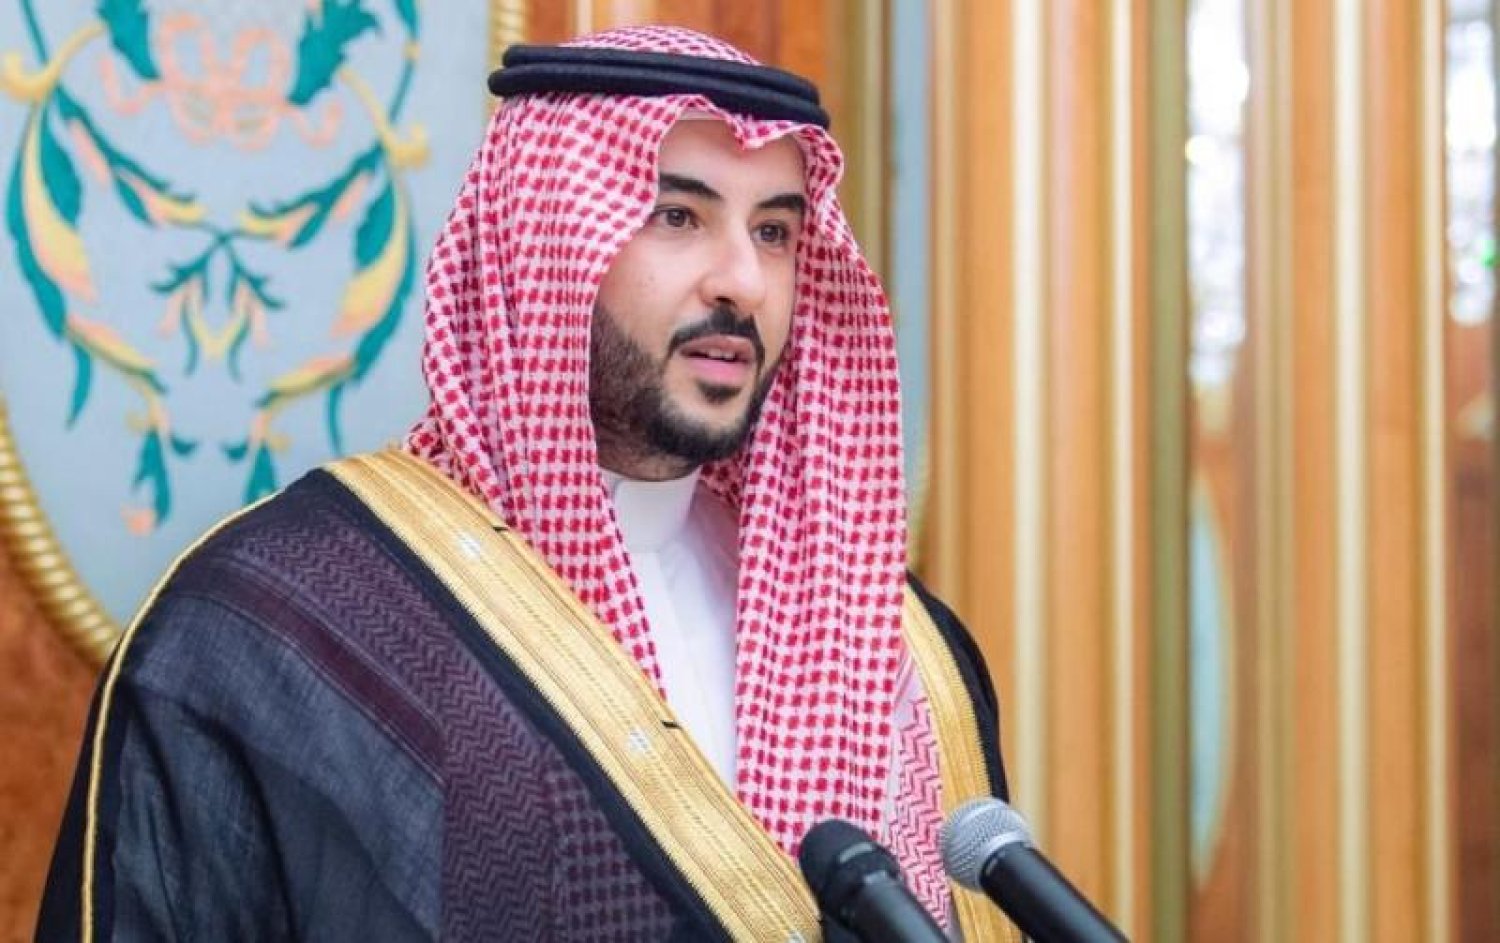 Prince Khalid bin Salman bin Abdulaziz Al Saud is Crown Prince Mohammed bin Salman's full brother. He served as ambassador to the US.